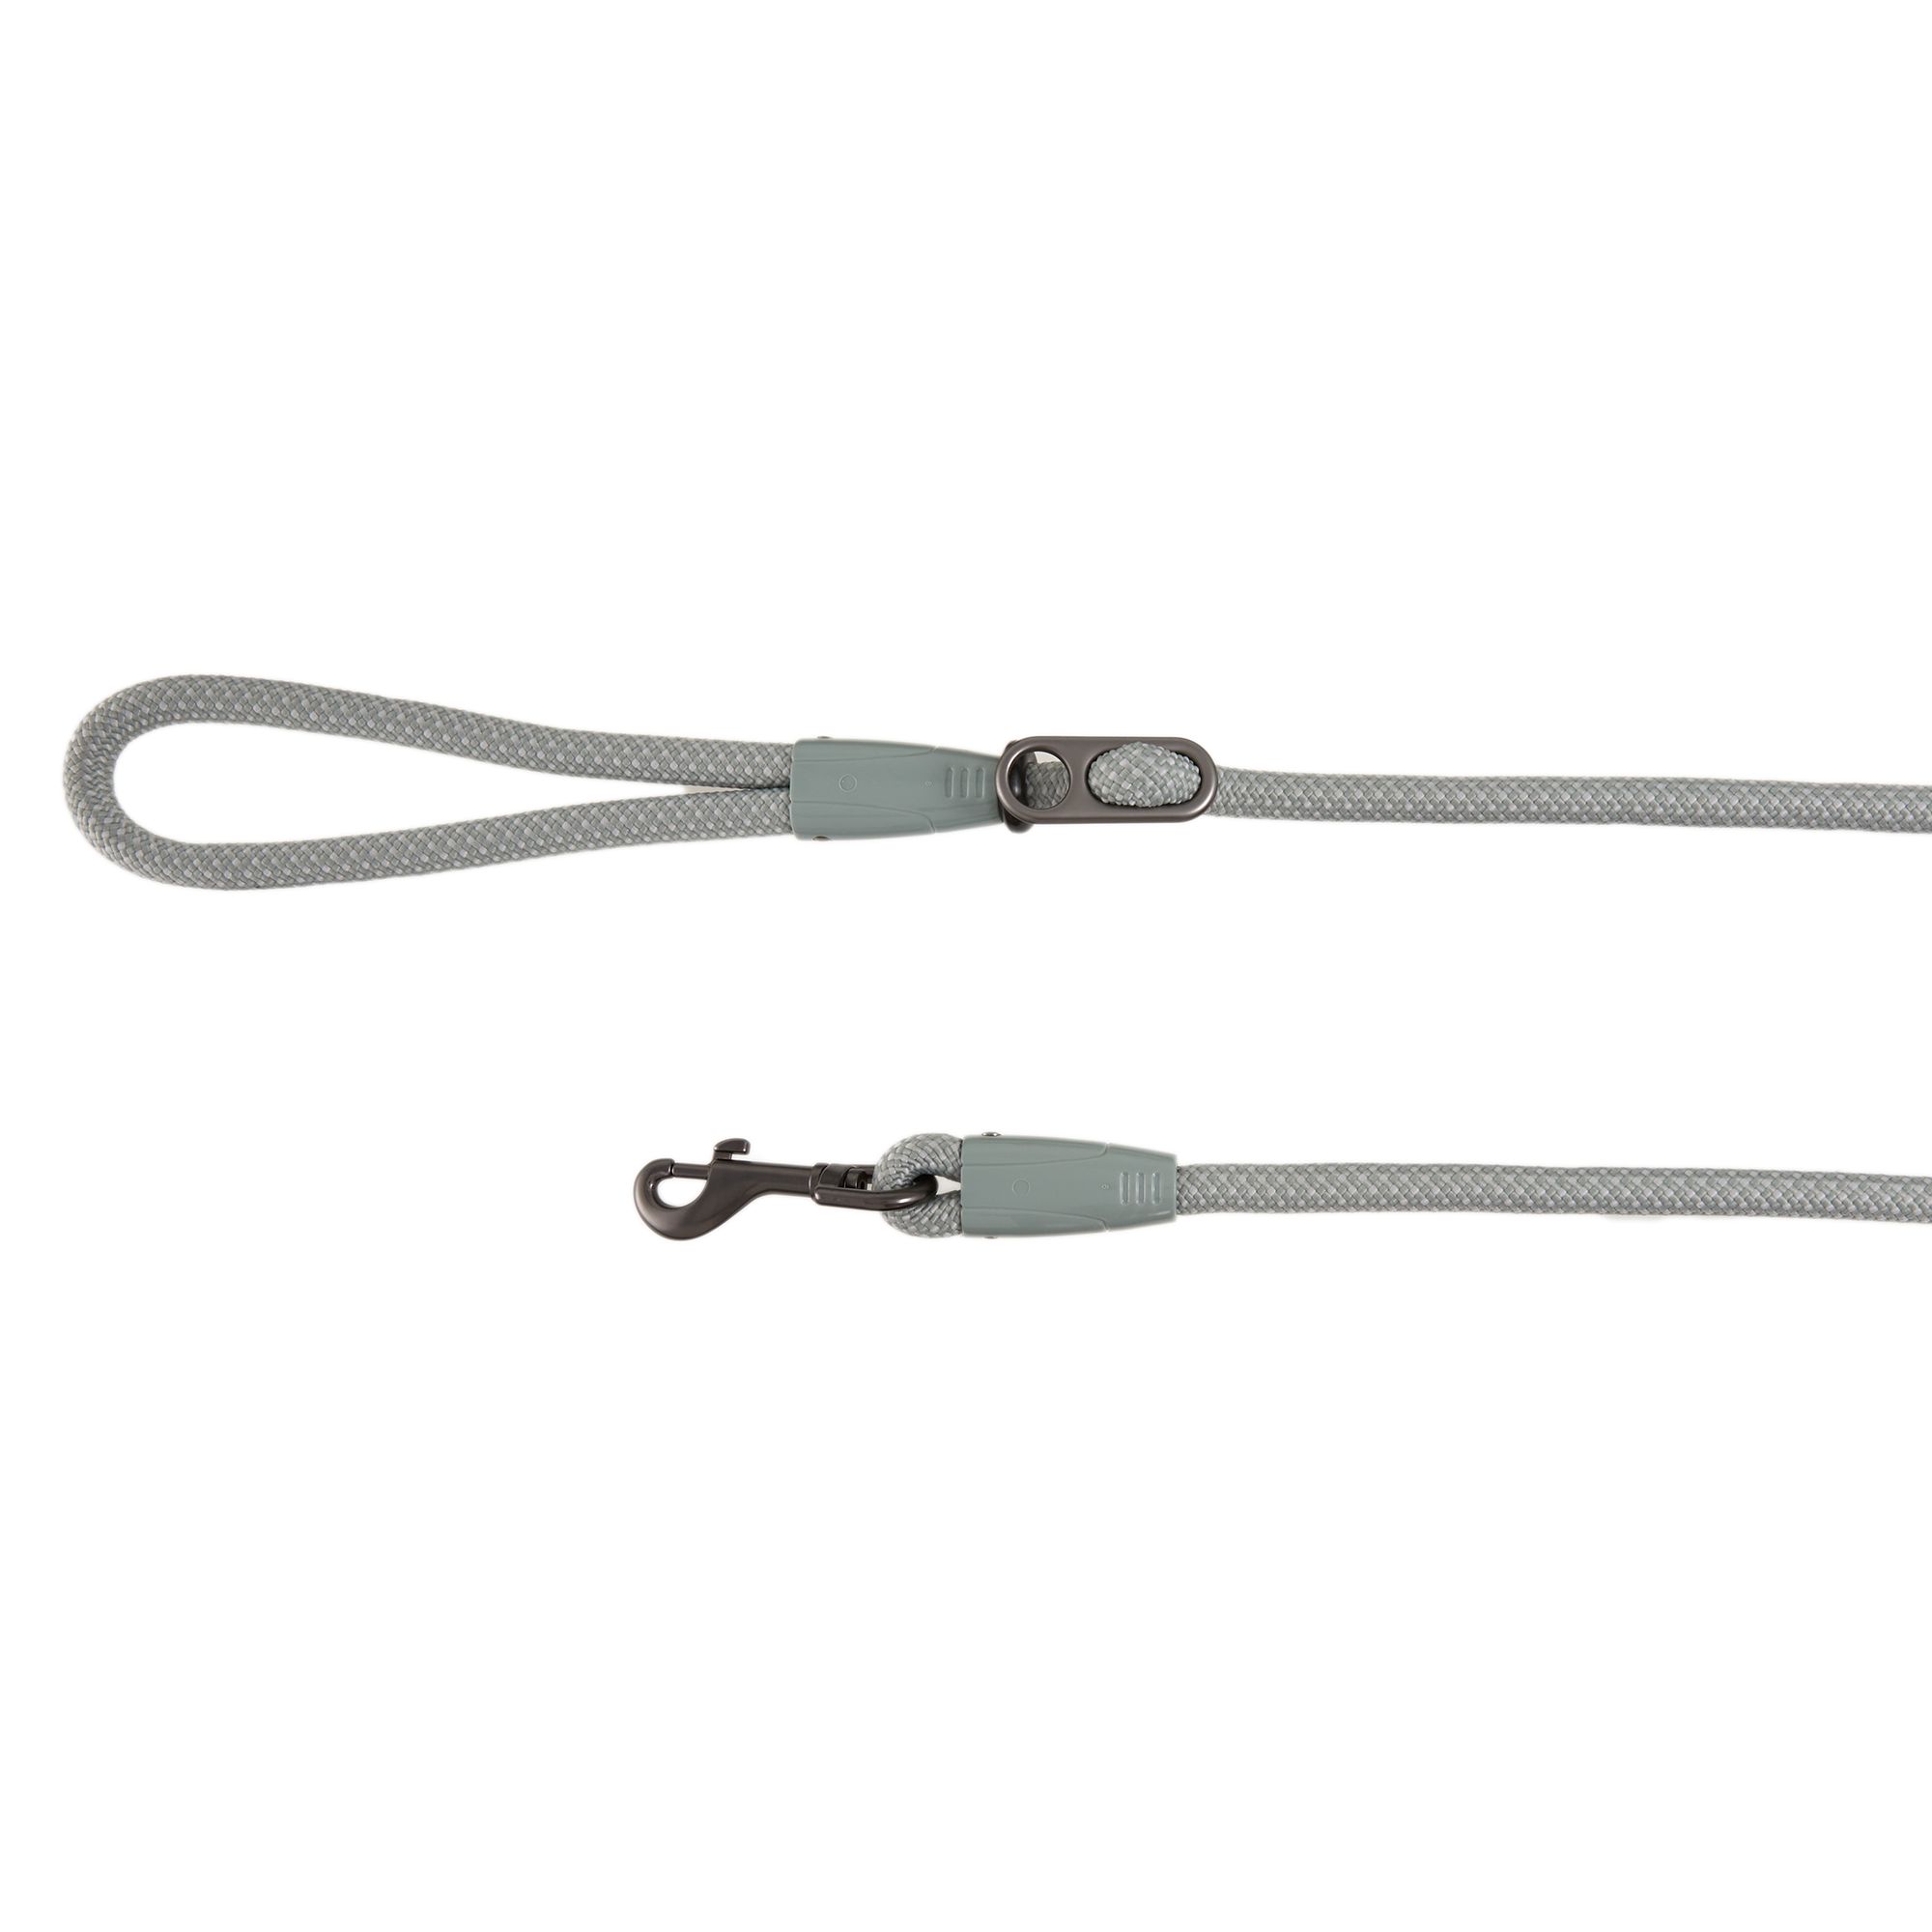 Top Paw® Rope Multi-Slip Dog Leash: 6.25-ft long